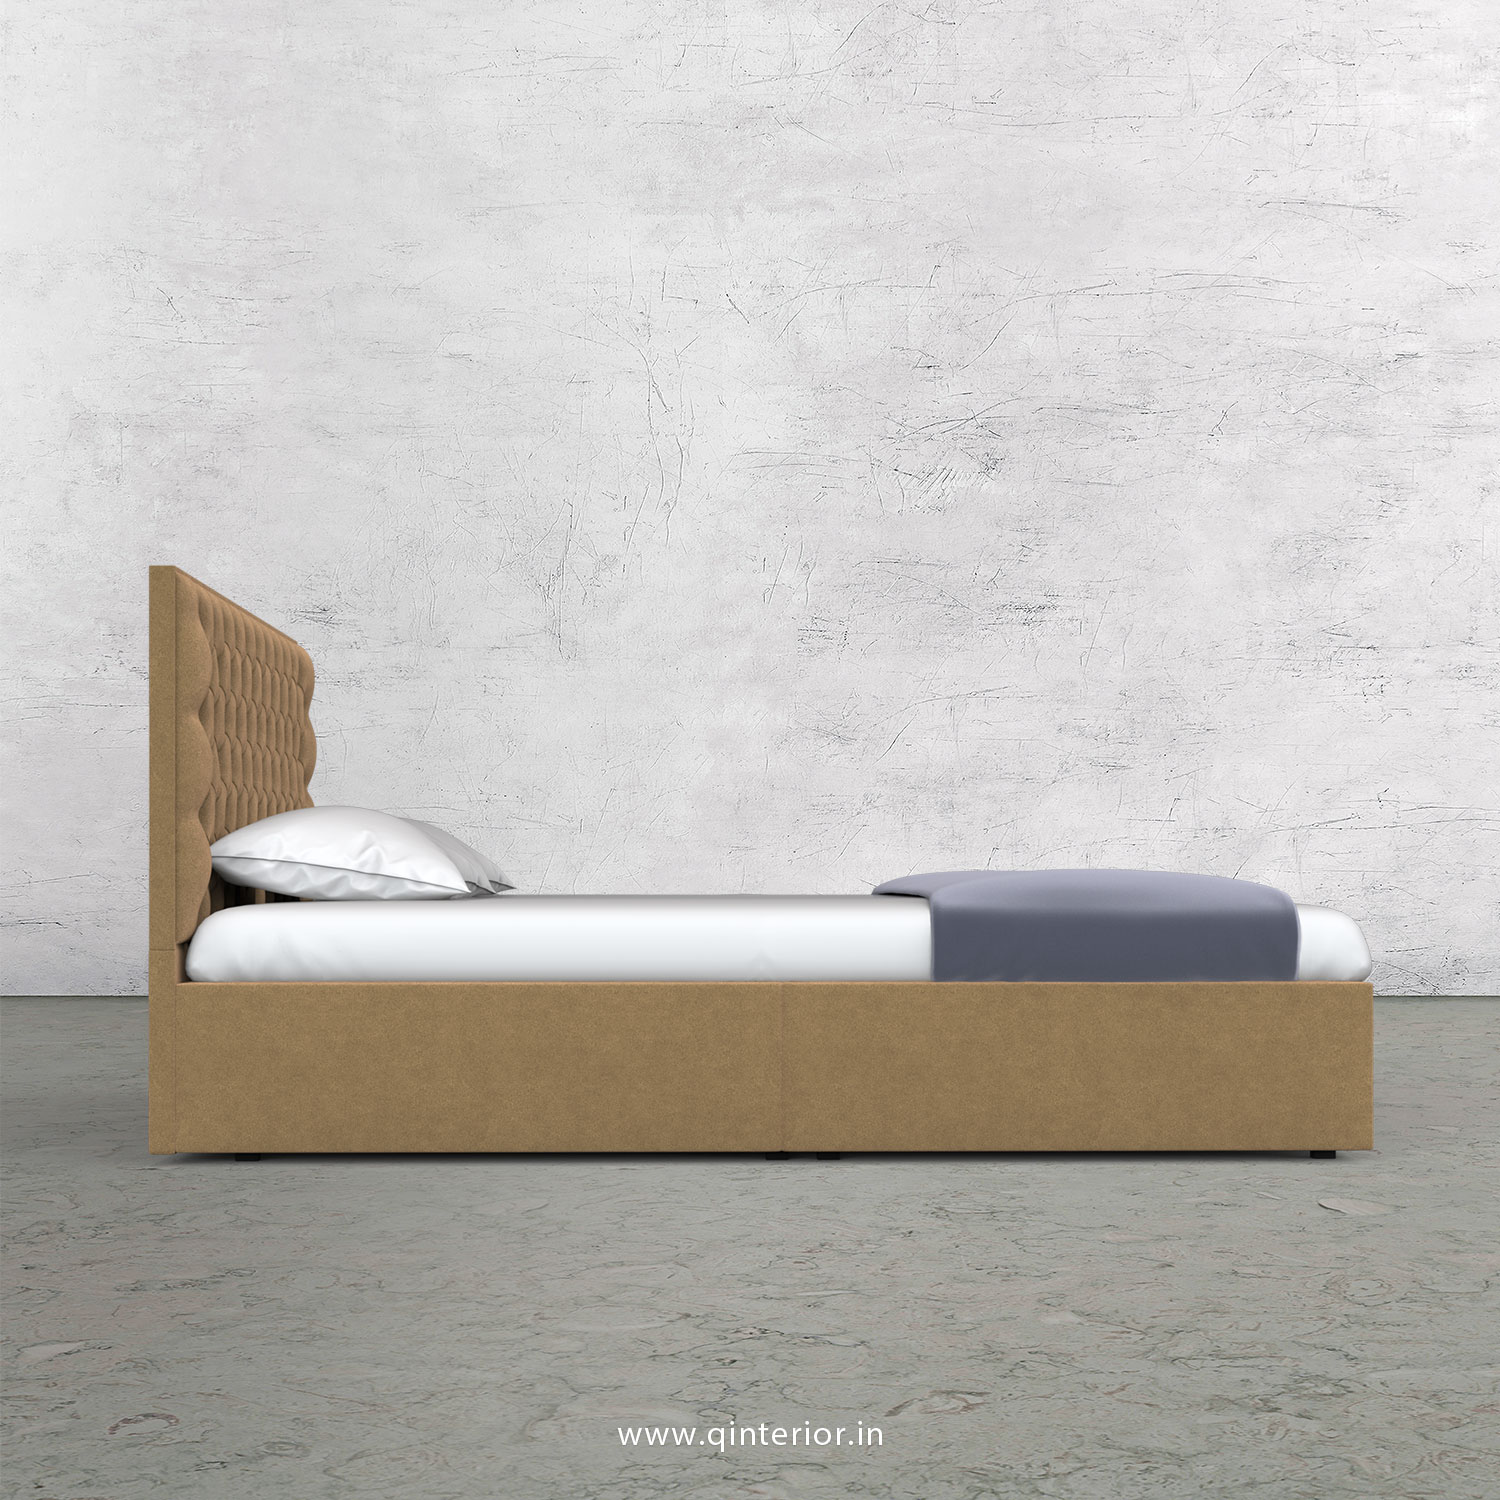 Orion King Size Storage Bed in Velvet Fabric - KBD001 VL09